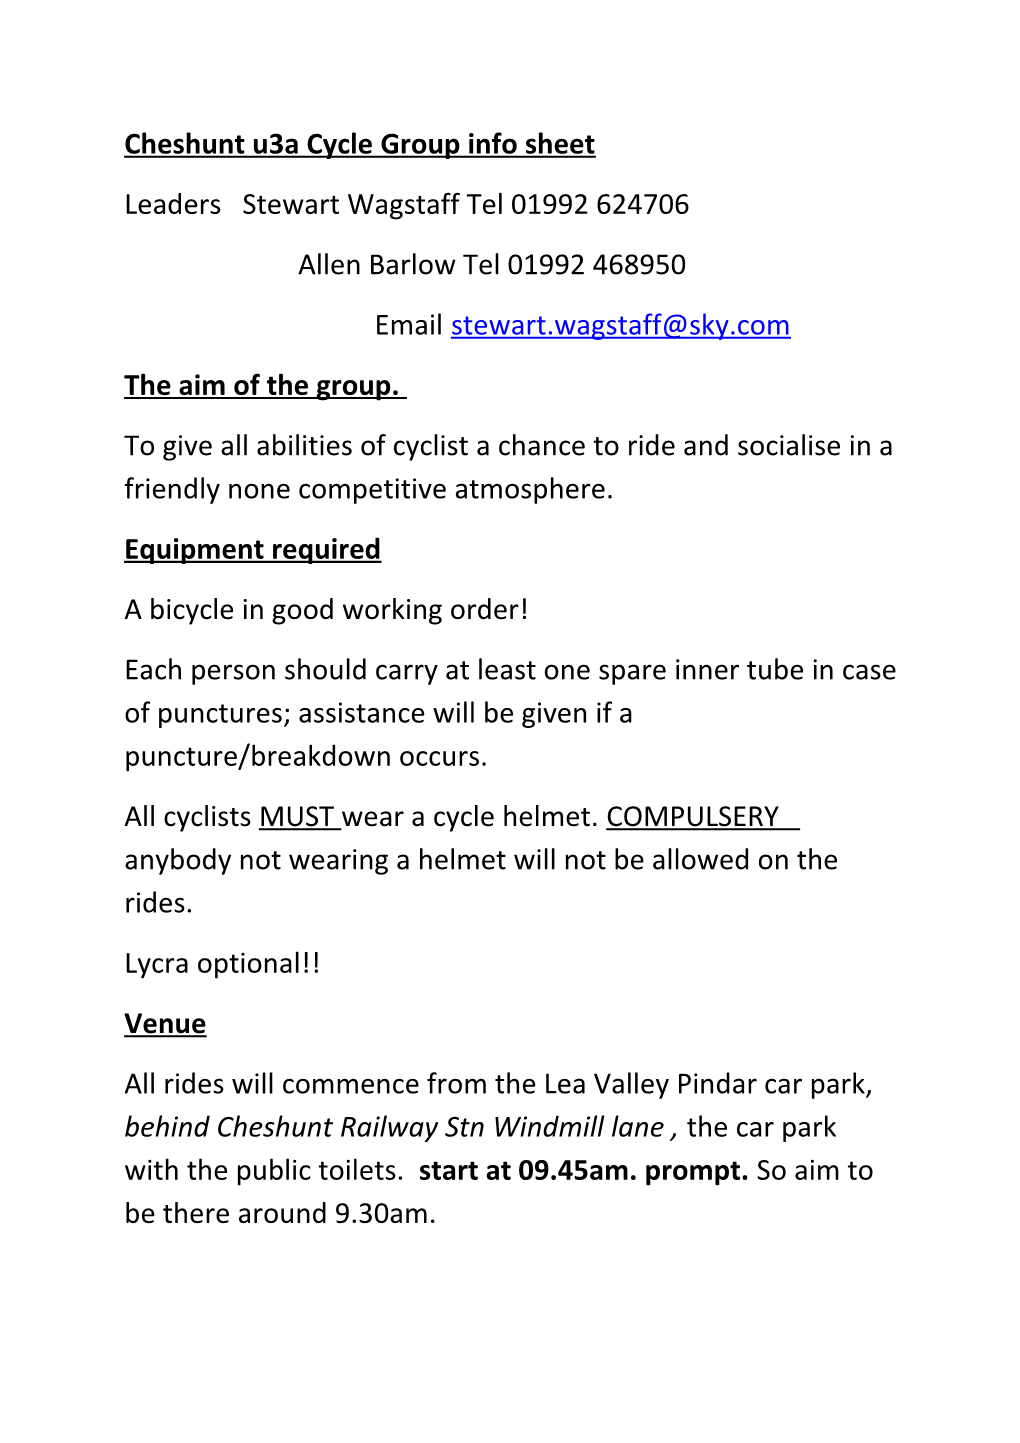 Cheshunt U3a Cycle Group Info Sheet